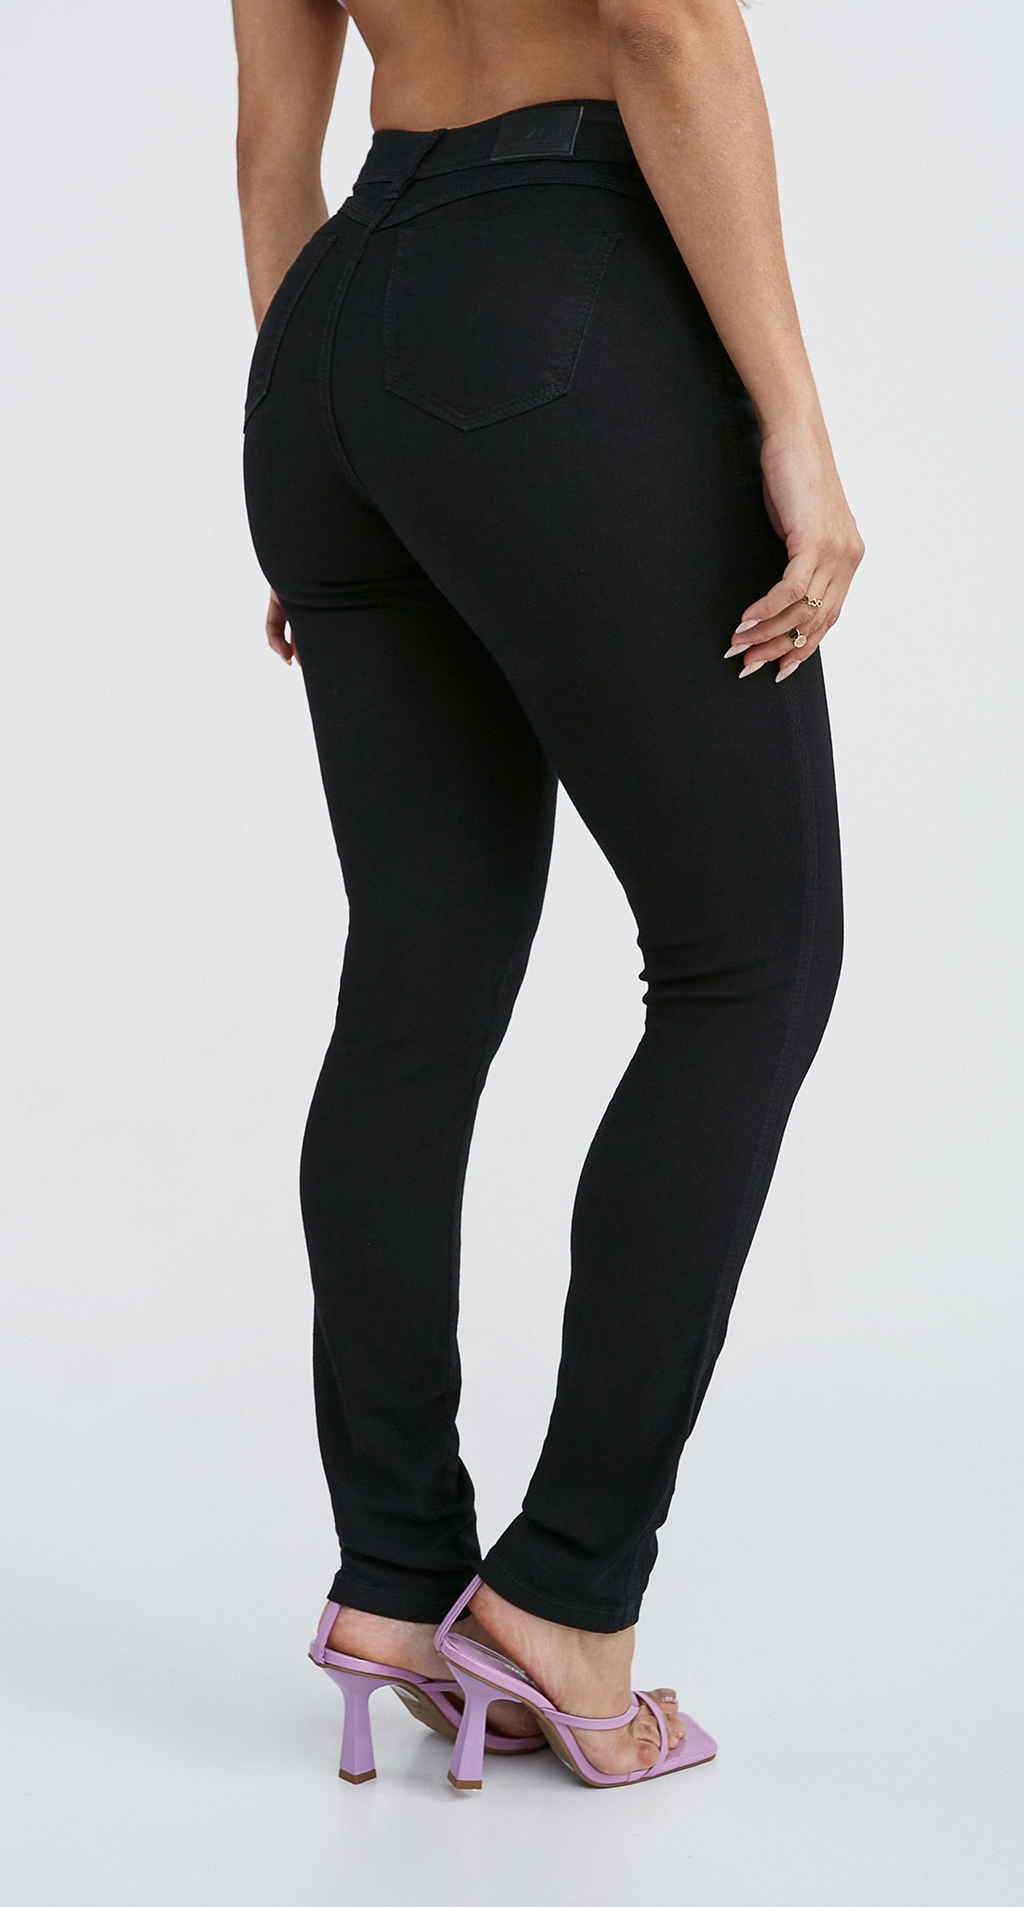 Qqq Yoga Pants Wearhouses Womens Black Leggings Size 8 Flare Jeans